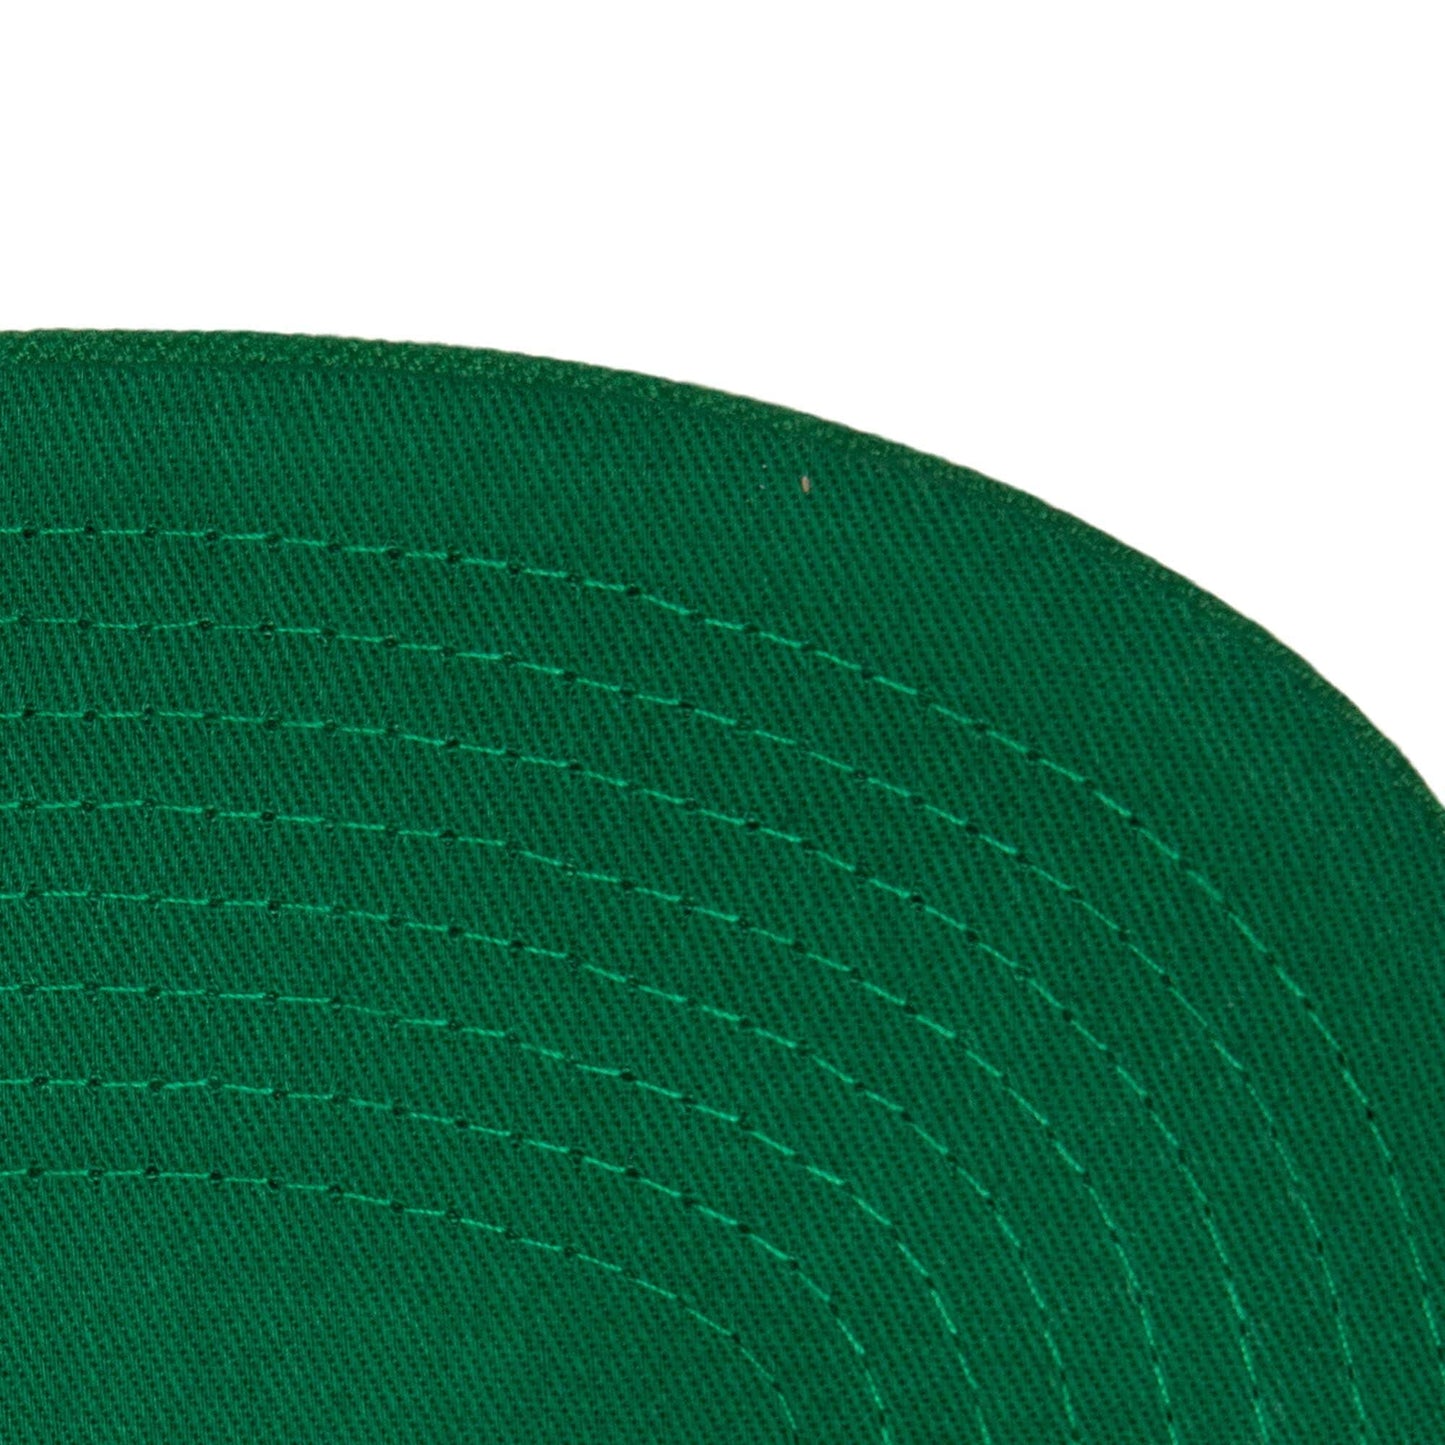 Men's Boston Celtics Mitchell & Ness 2 Tone Black and Green Low Big Face Hardwood Classics Snapback Hat